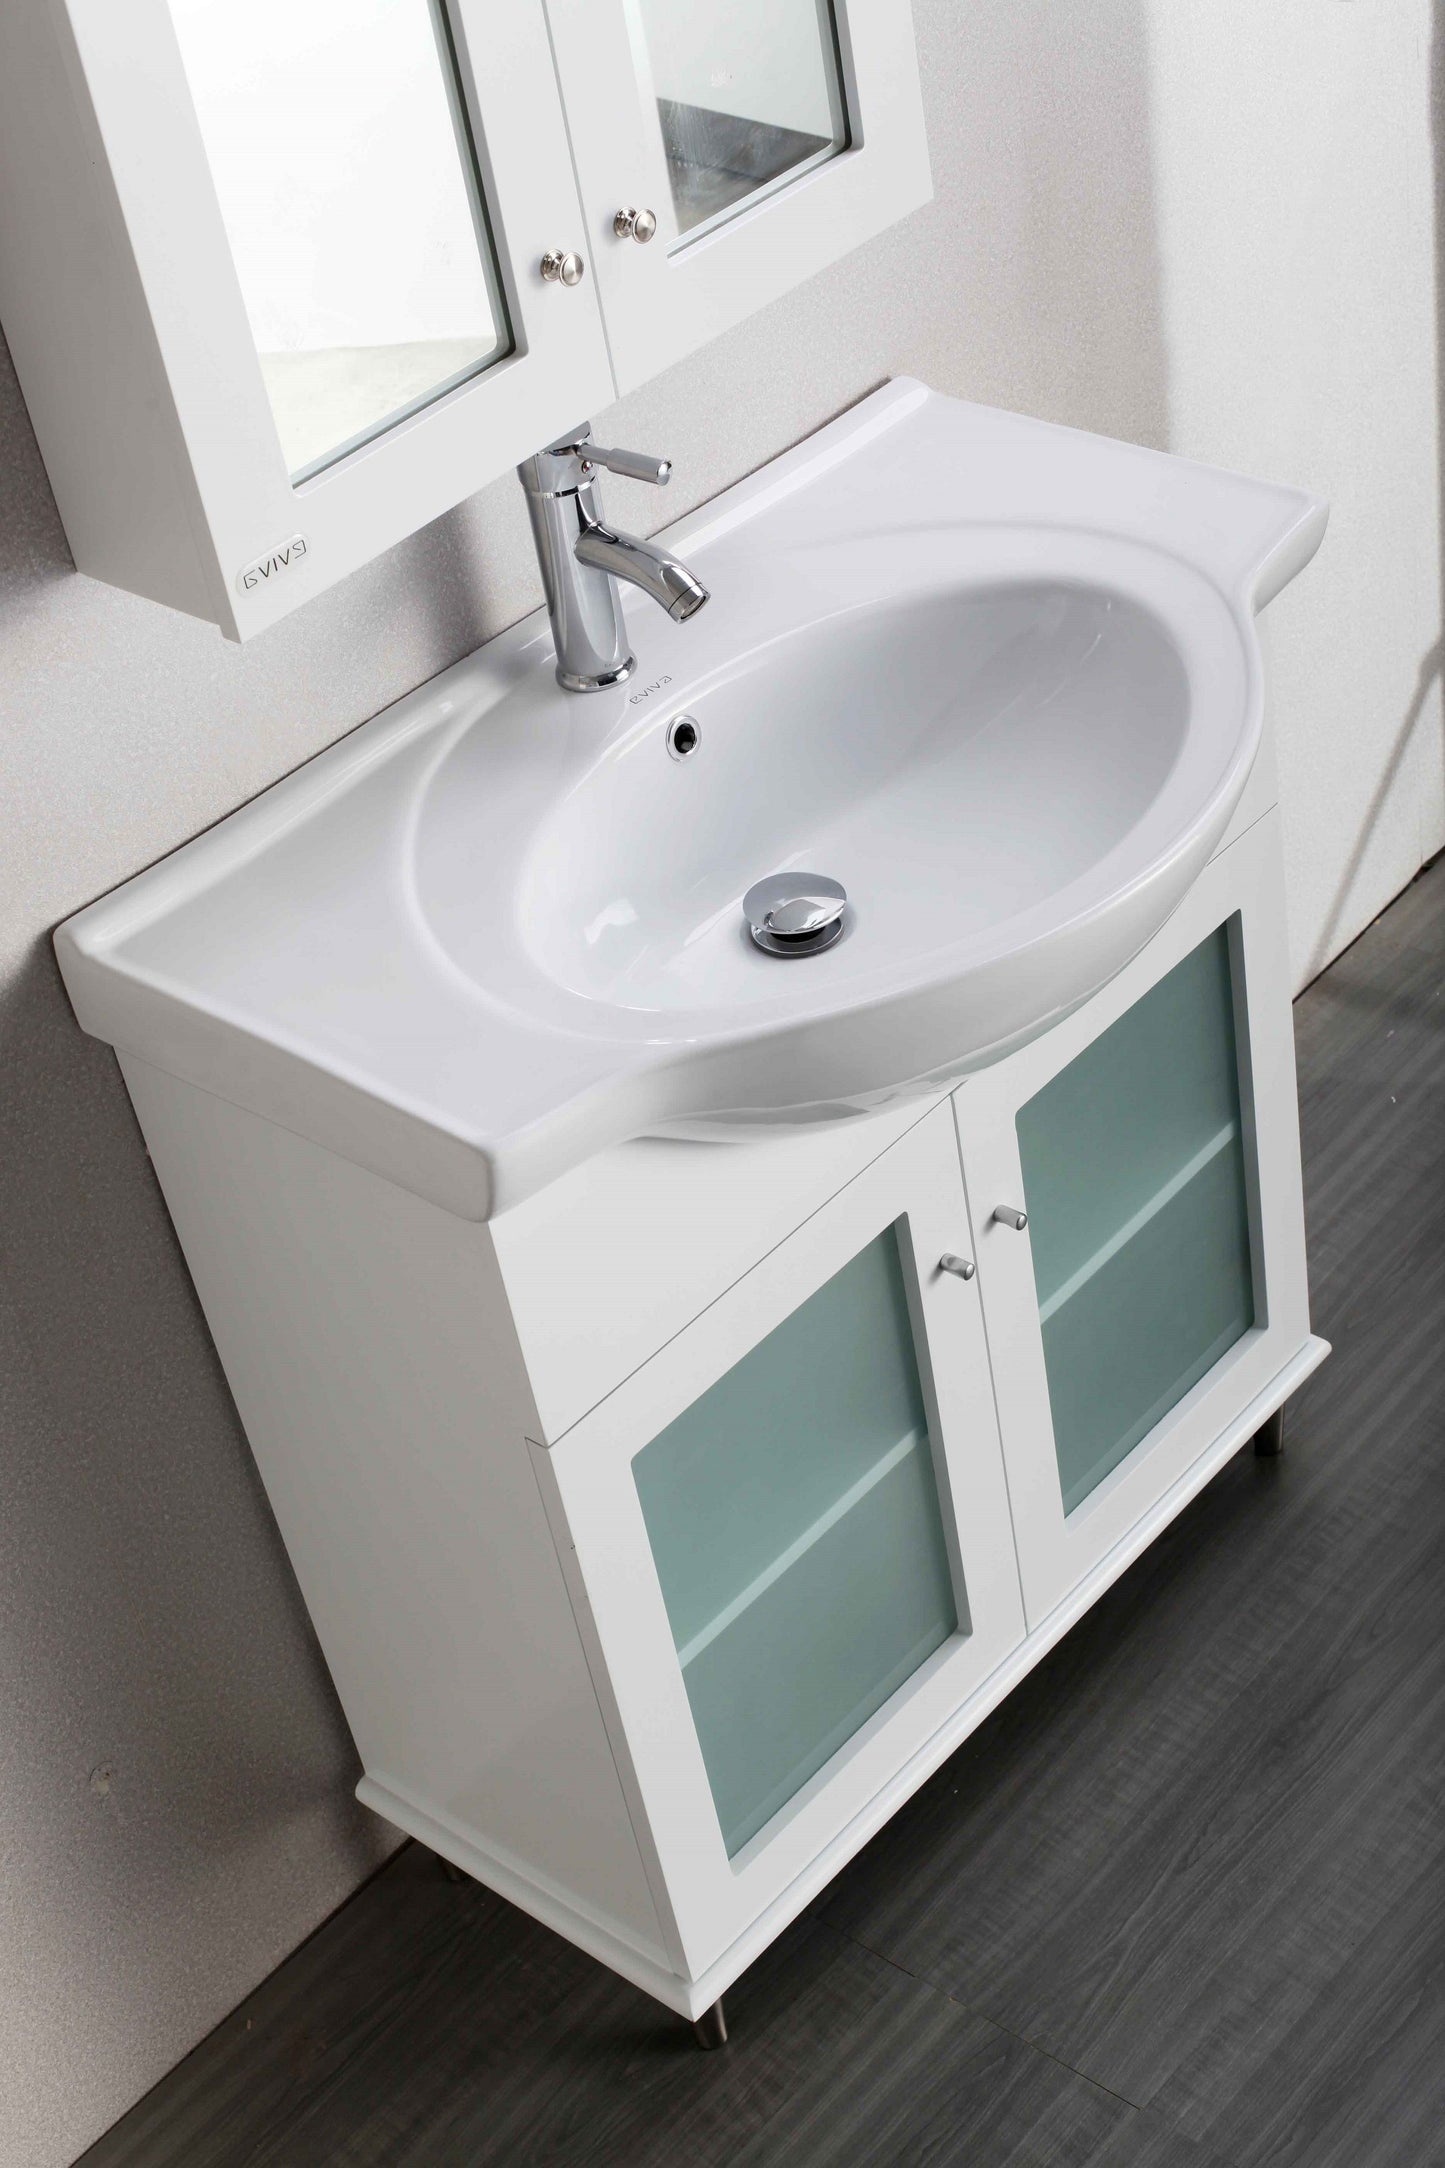 Eviva TUX  24" Inch Bathroom Vanity with a white Porcelain Sink - Luxe Bathroom Vanities Luxury Bathroom Fixtures Bathroom Furniture